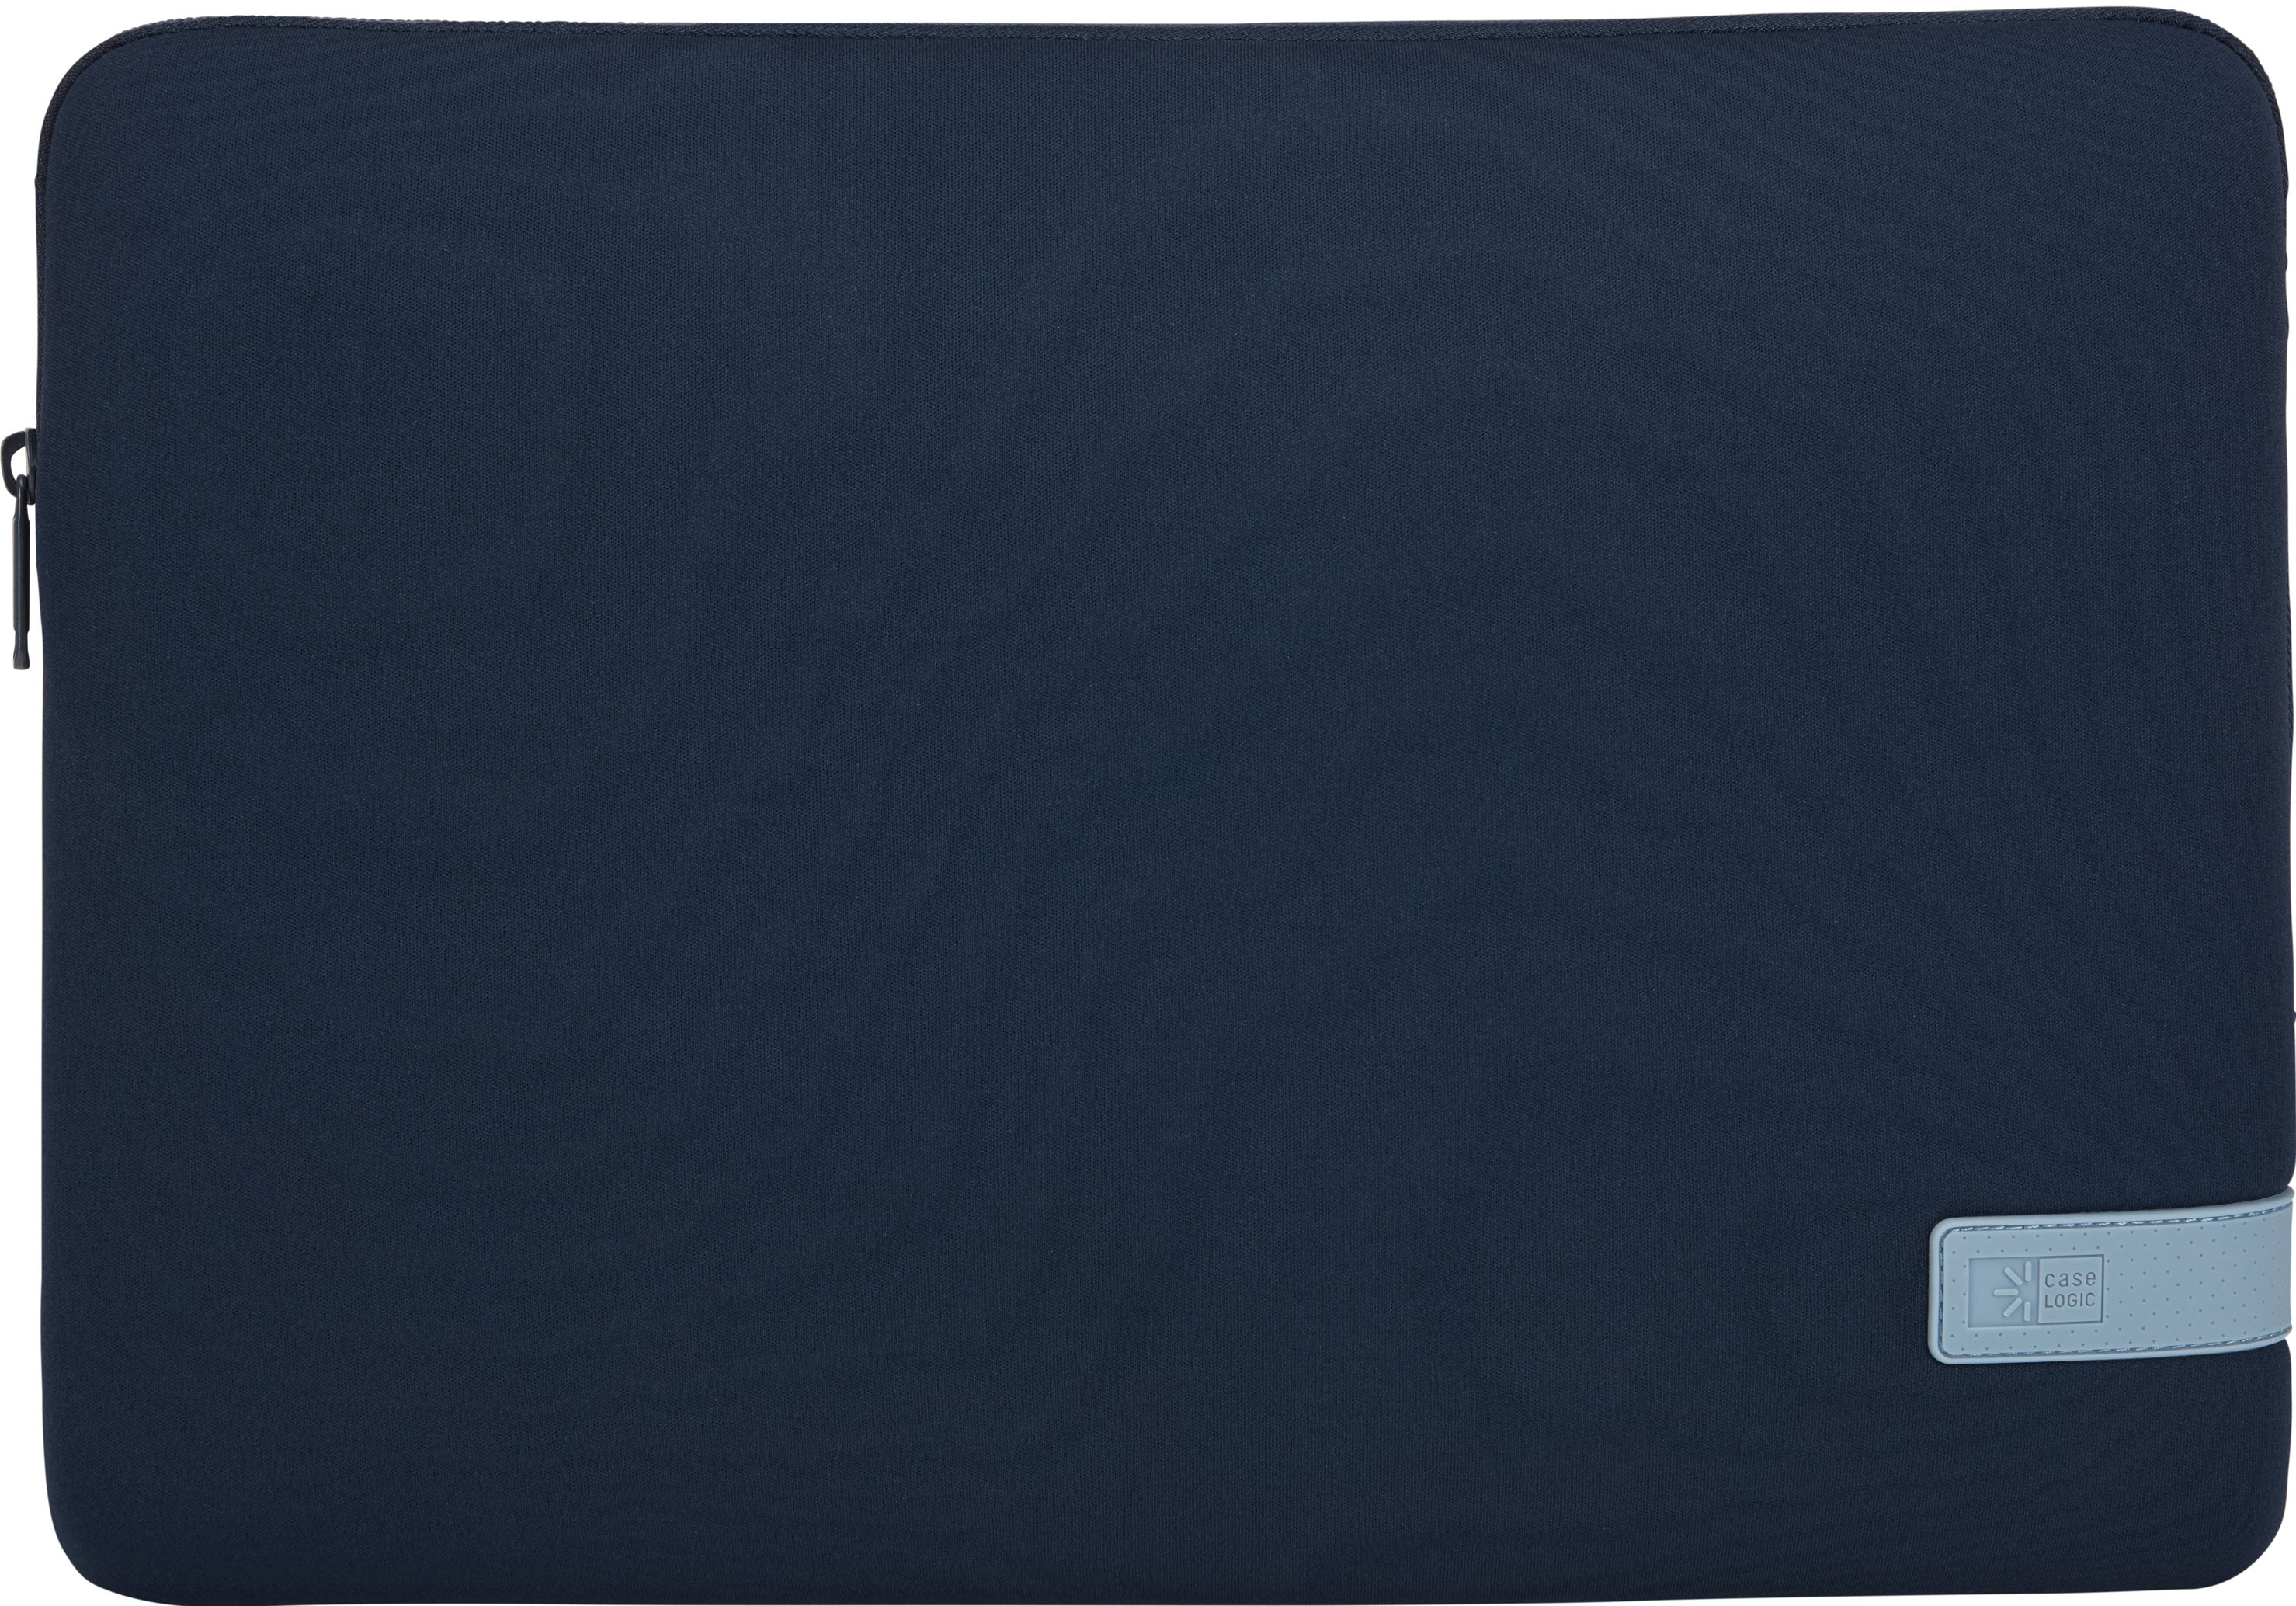 CASE LOGIC Reflect Laptop Sleeve 15.6 p. 407652 bleu foncé bleu foncé